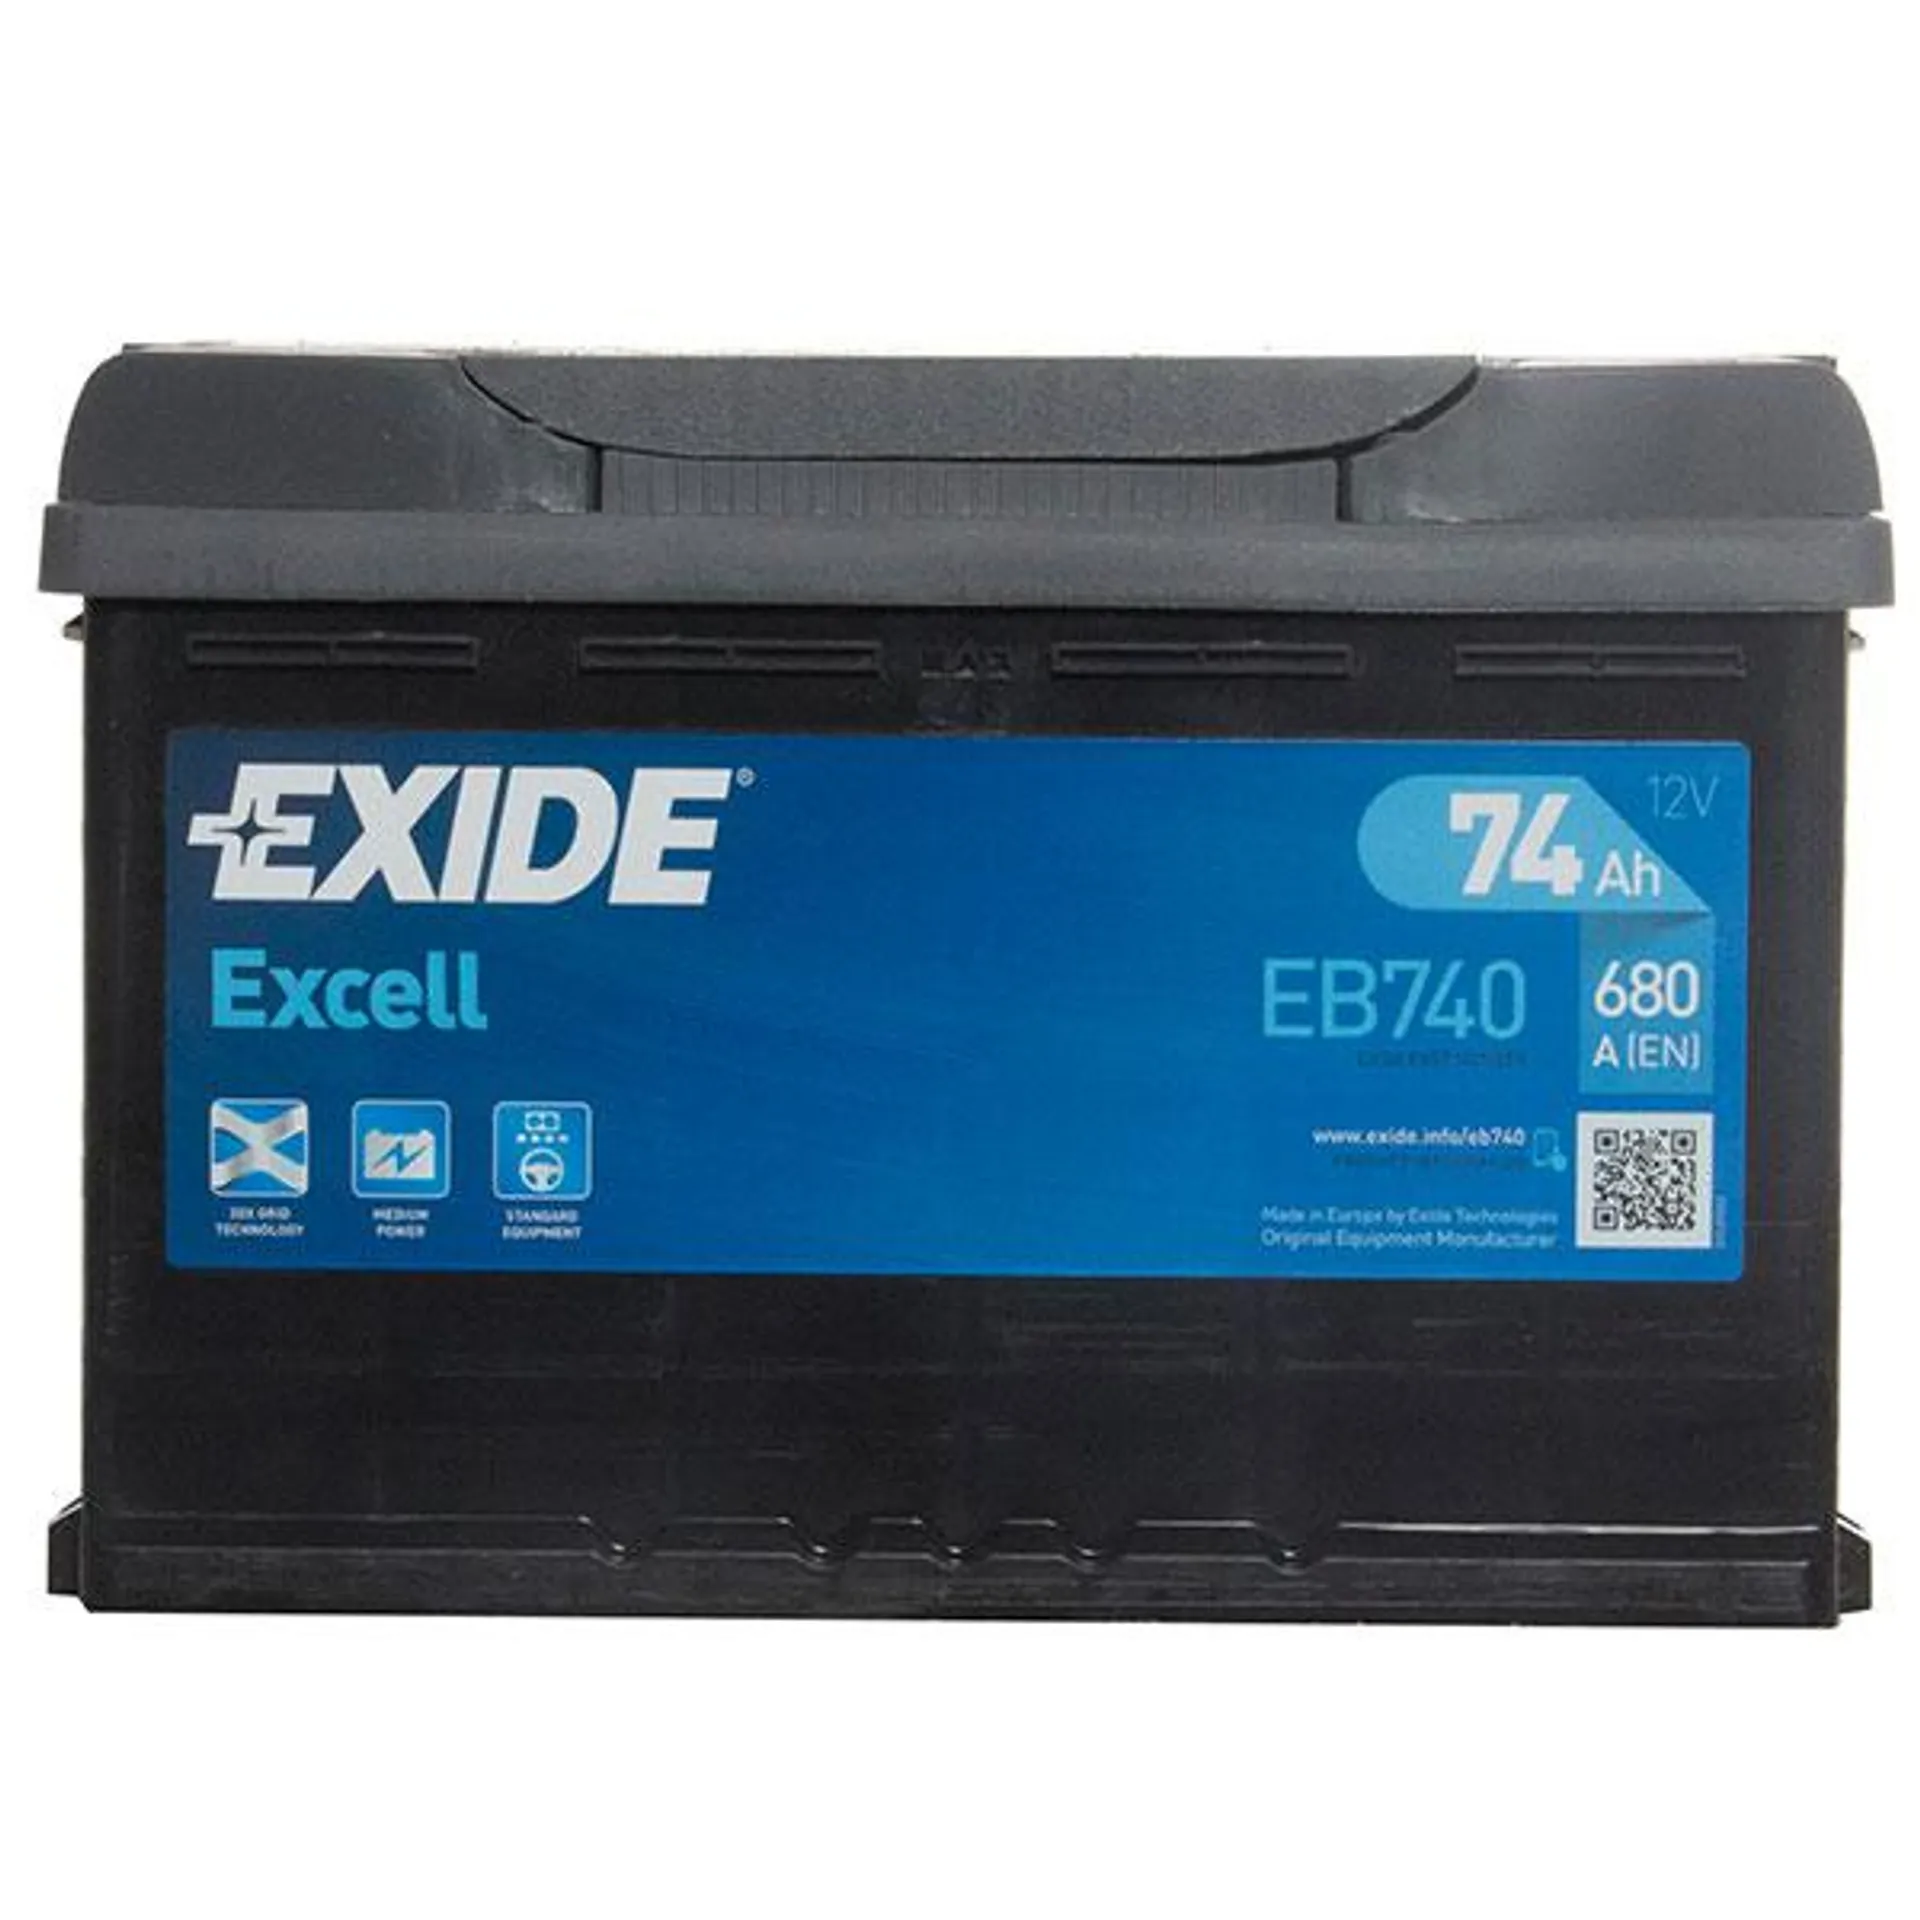 Exide Excel 096 Car Battery - 3 Year Guarantee